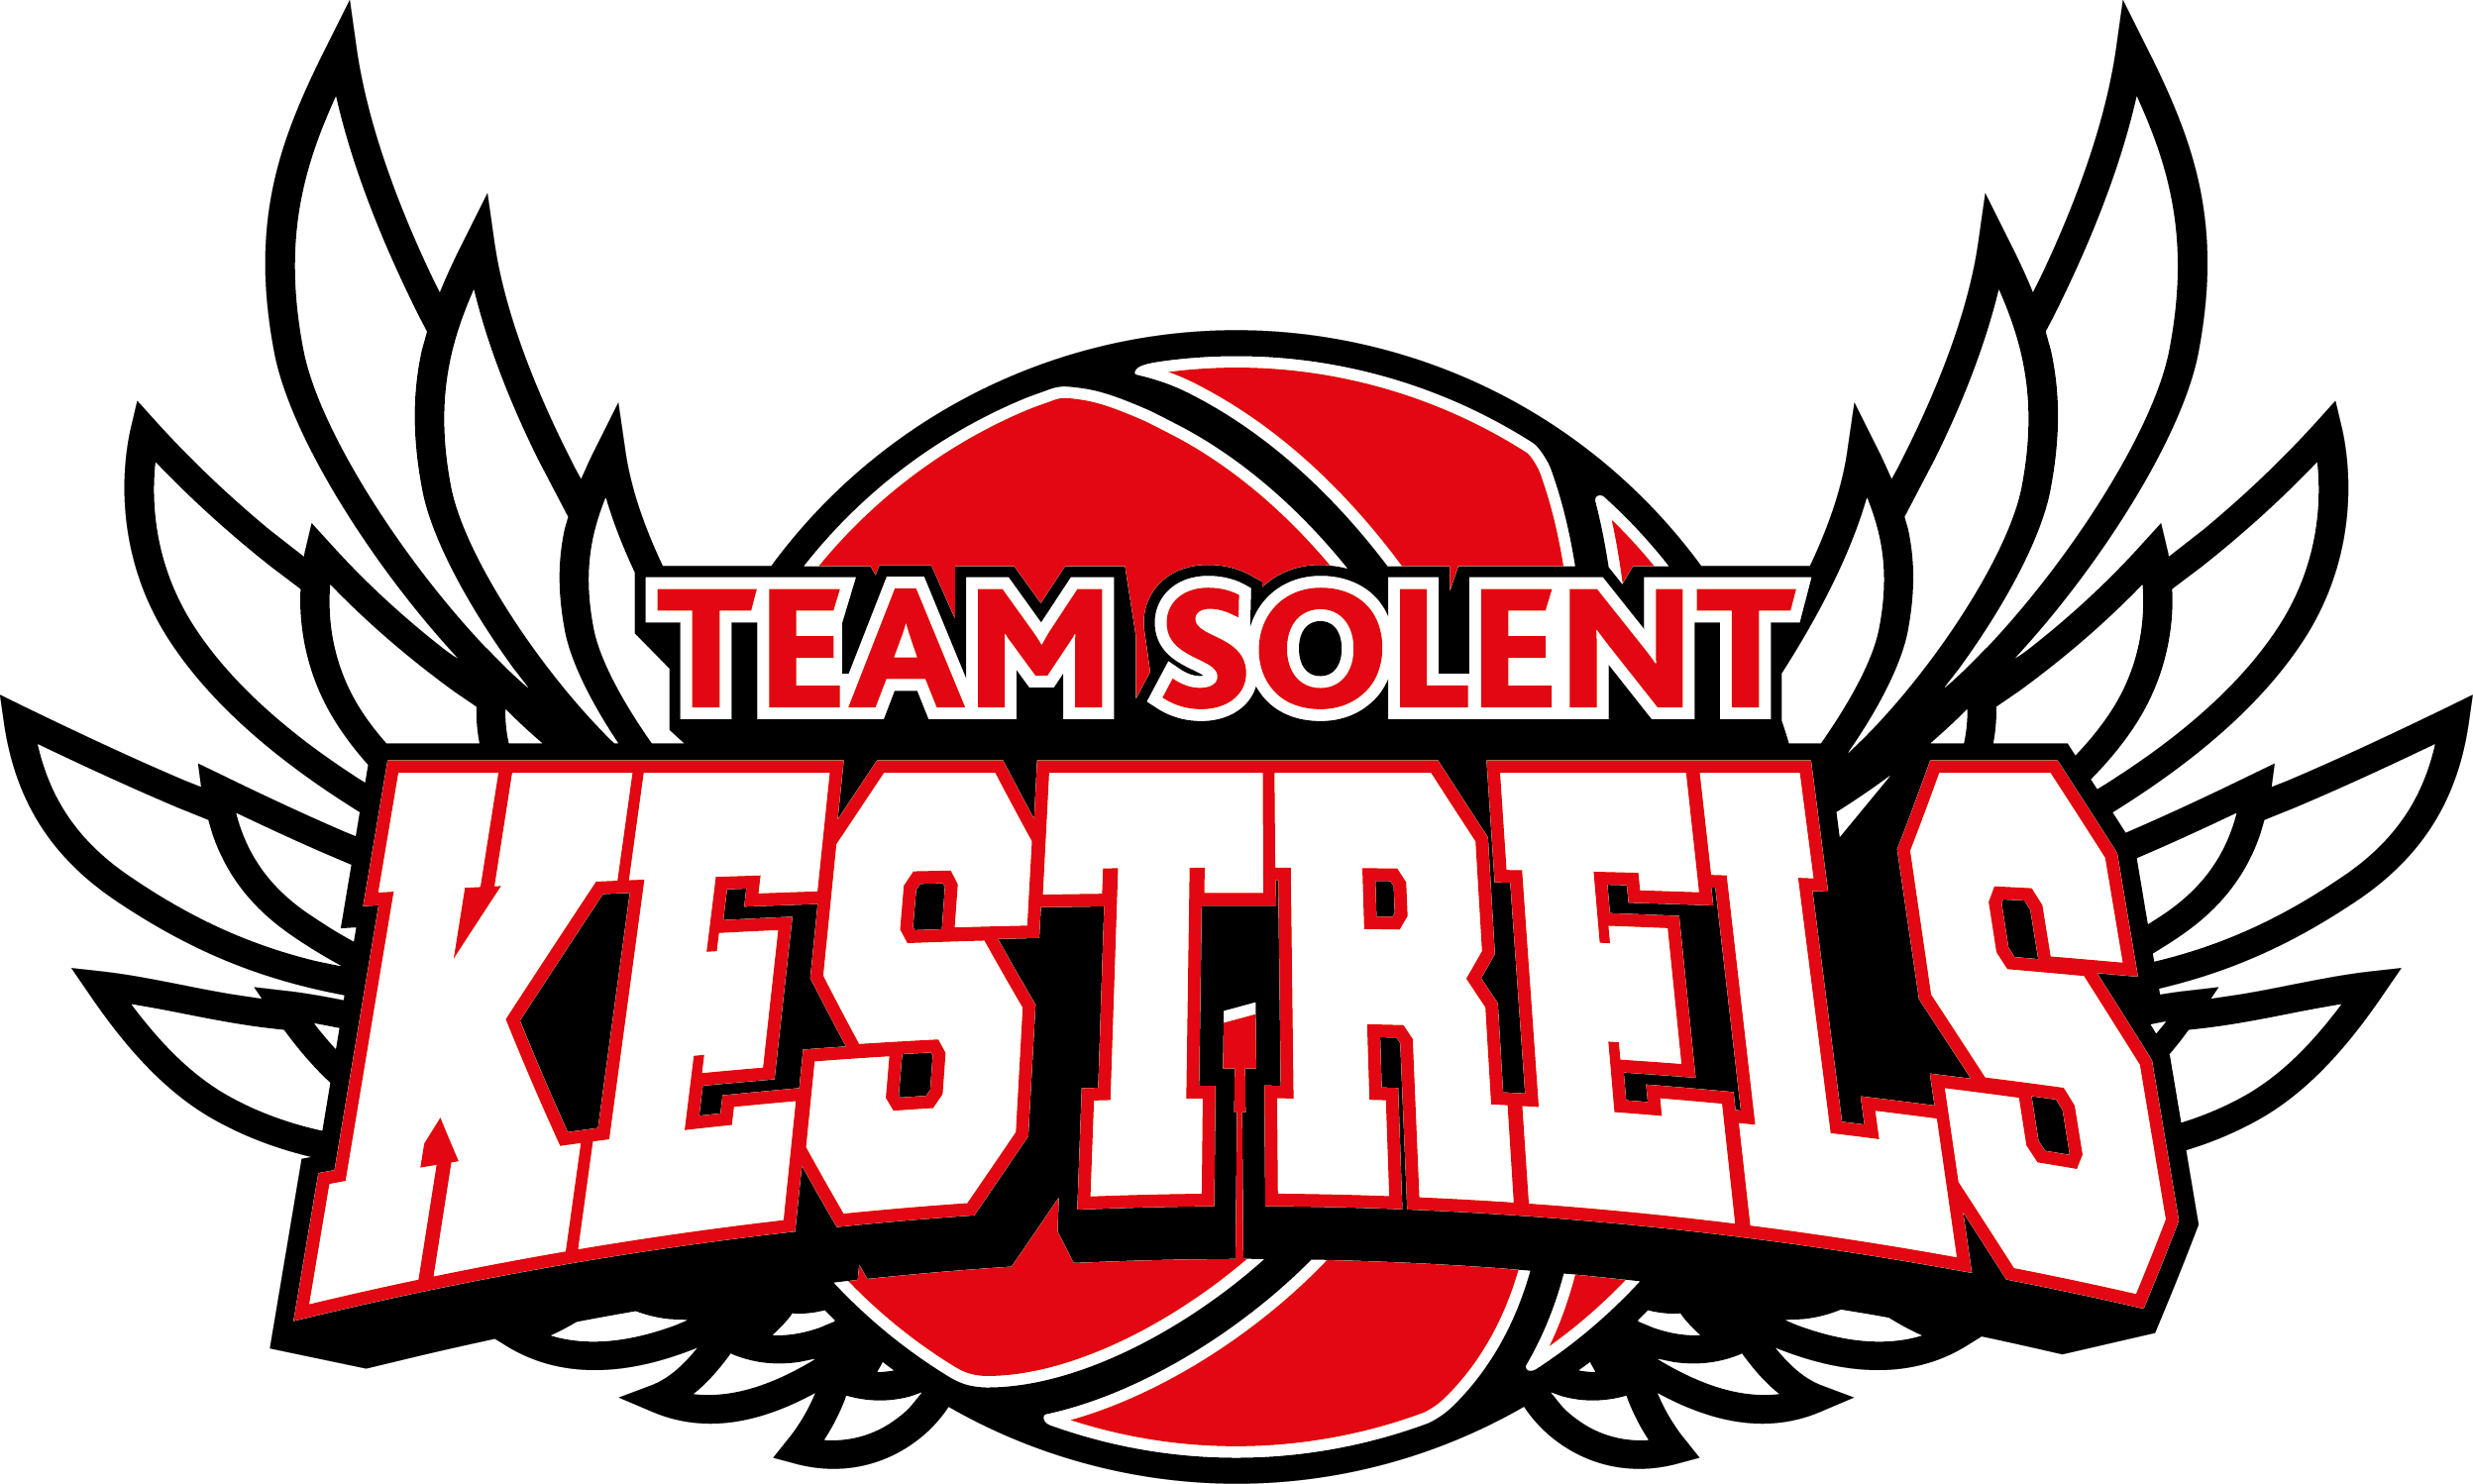 Team Solent Kestrels logo